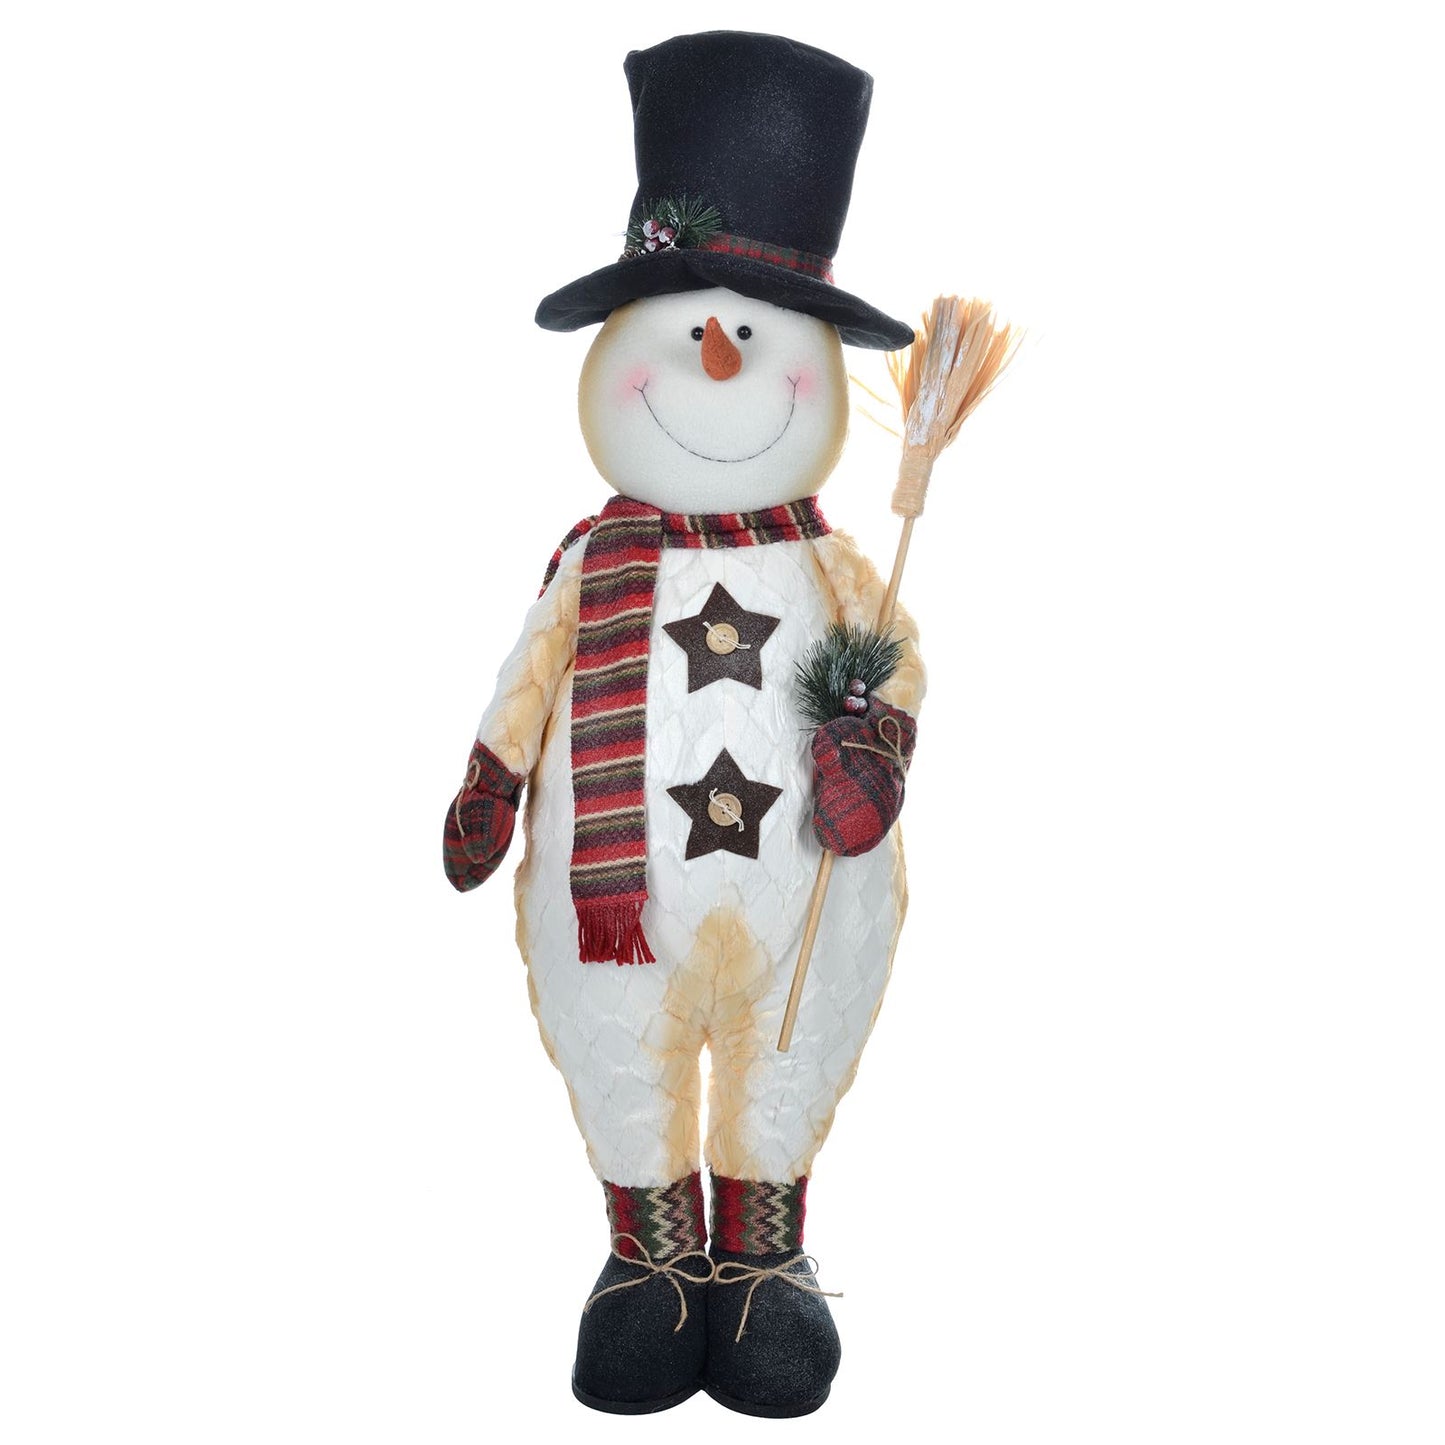 Mr Crimbo Plush Snowman Decoration Traditional Top Hat - MrCrimbo.co.uk -XS5147 - 98cm -christmas decorations